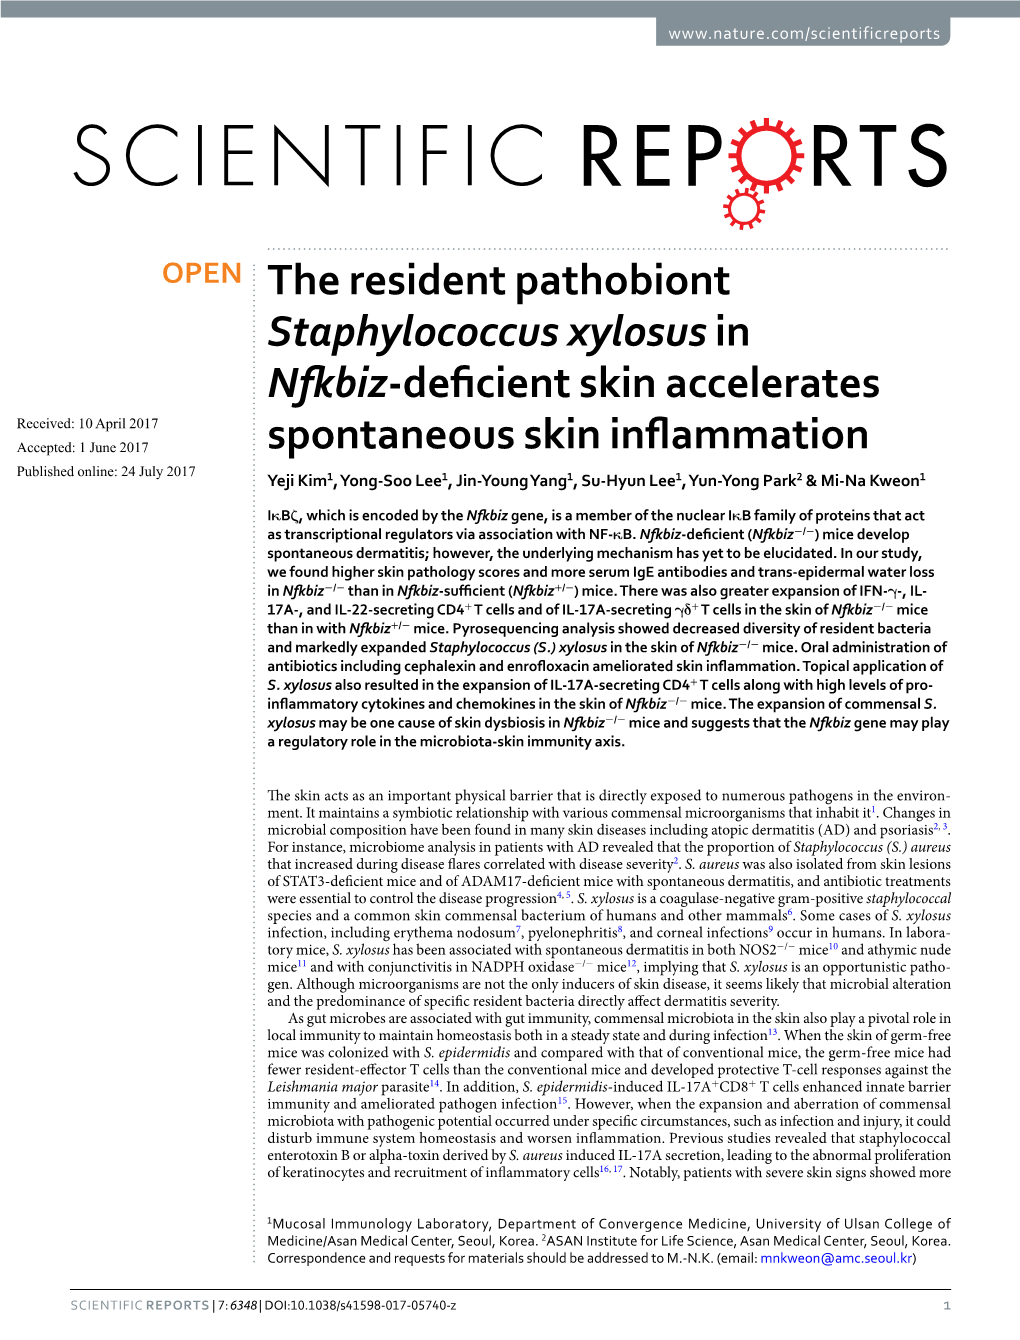 The Resident Pathobiont Staphylococcus Xylosus in Nfkbiz